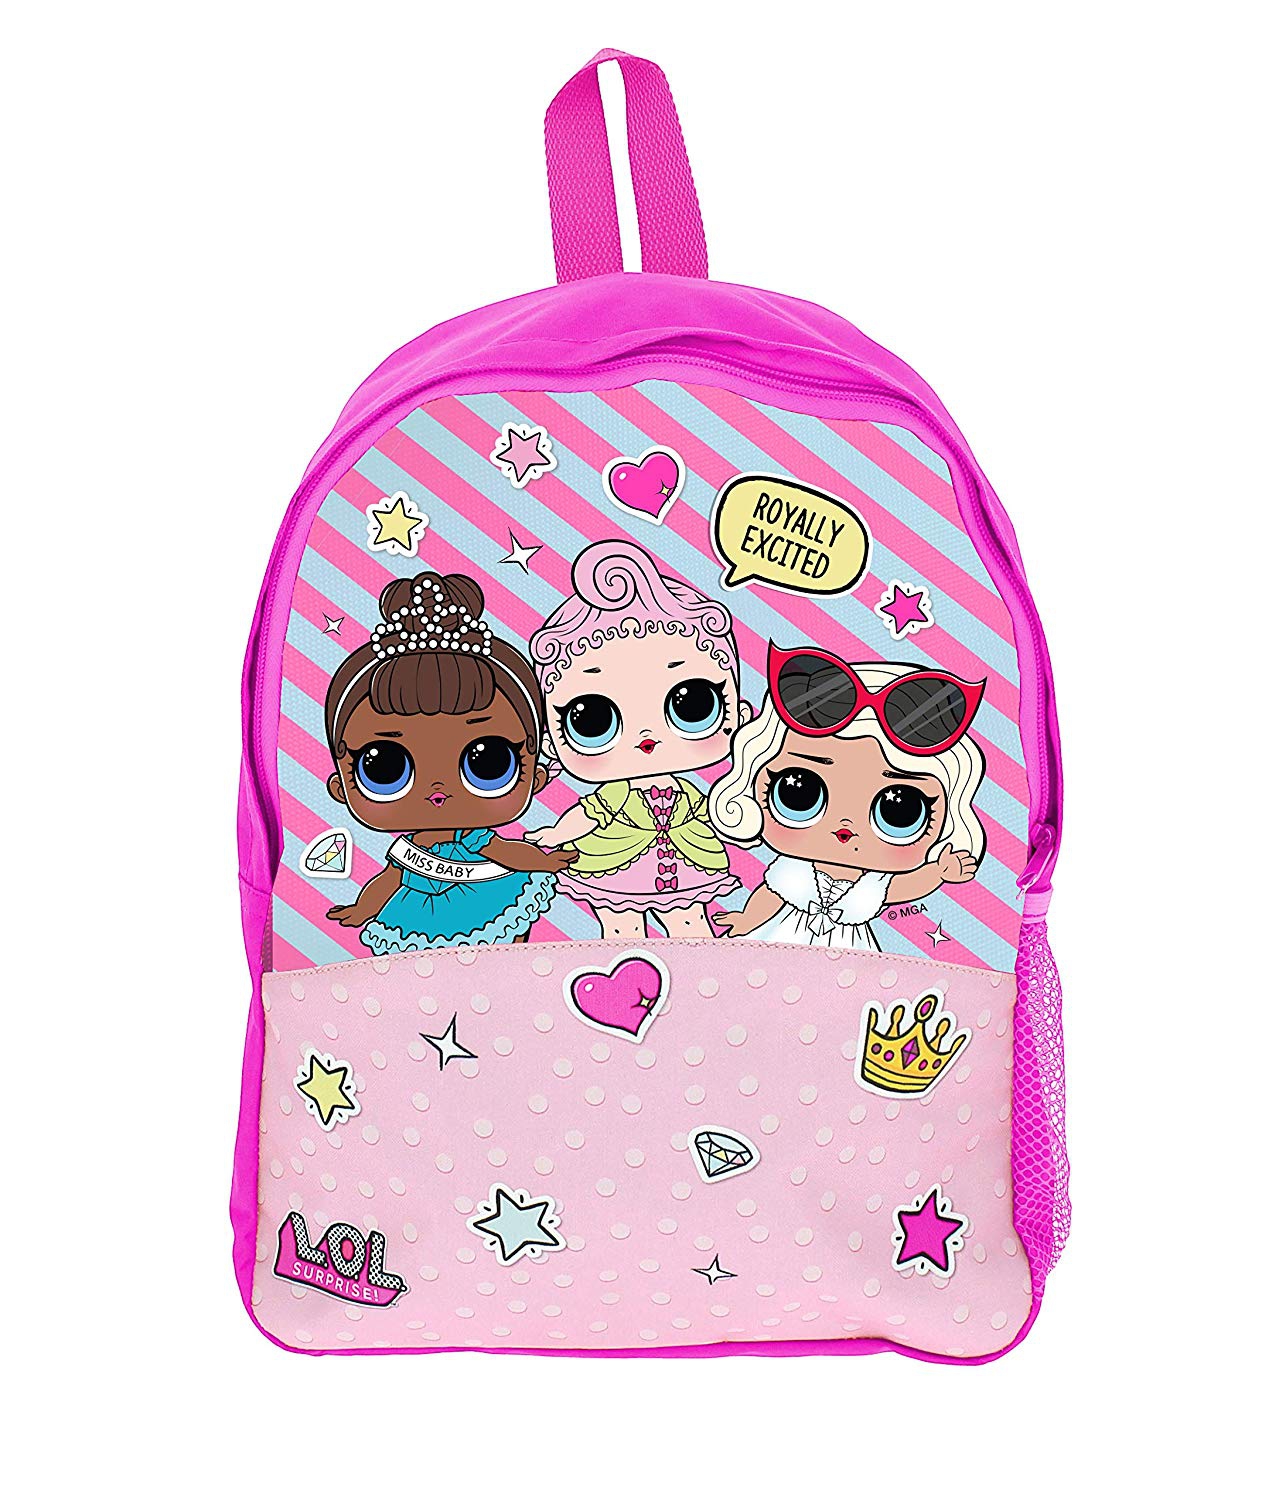 Lol Surprise Roxy School Bag Rucksack Backpack